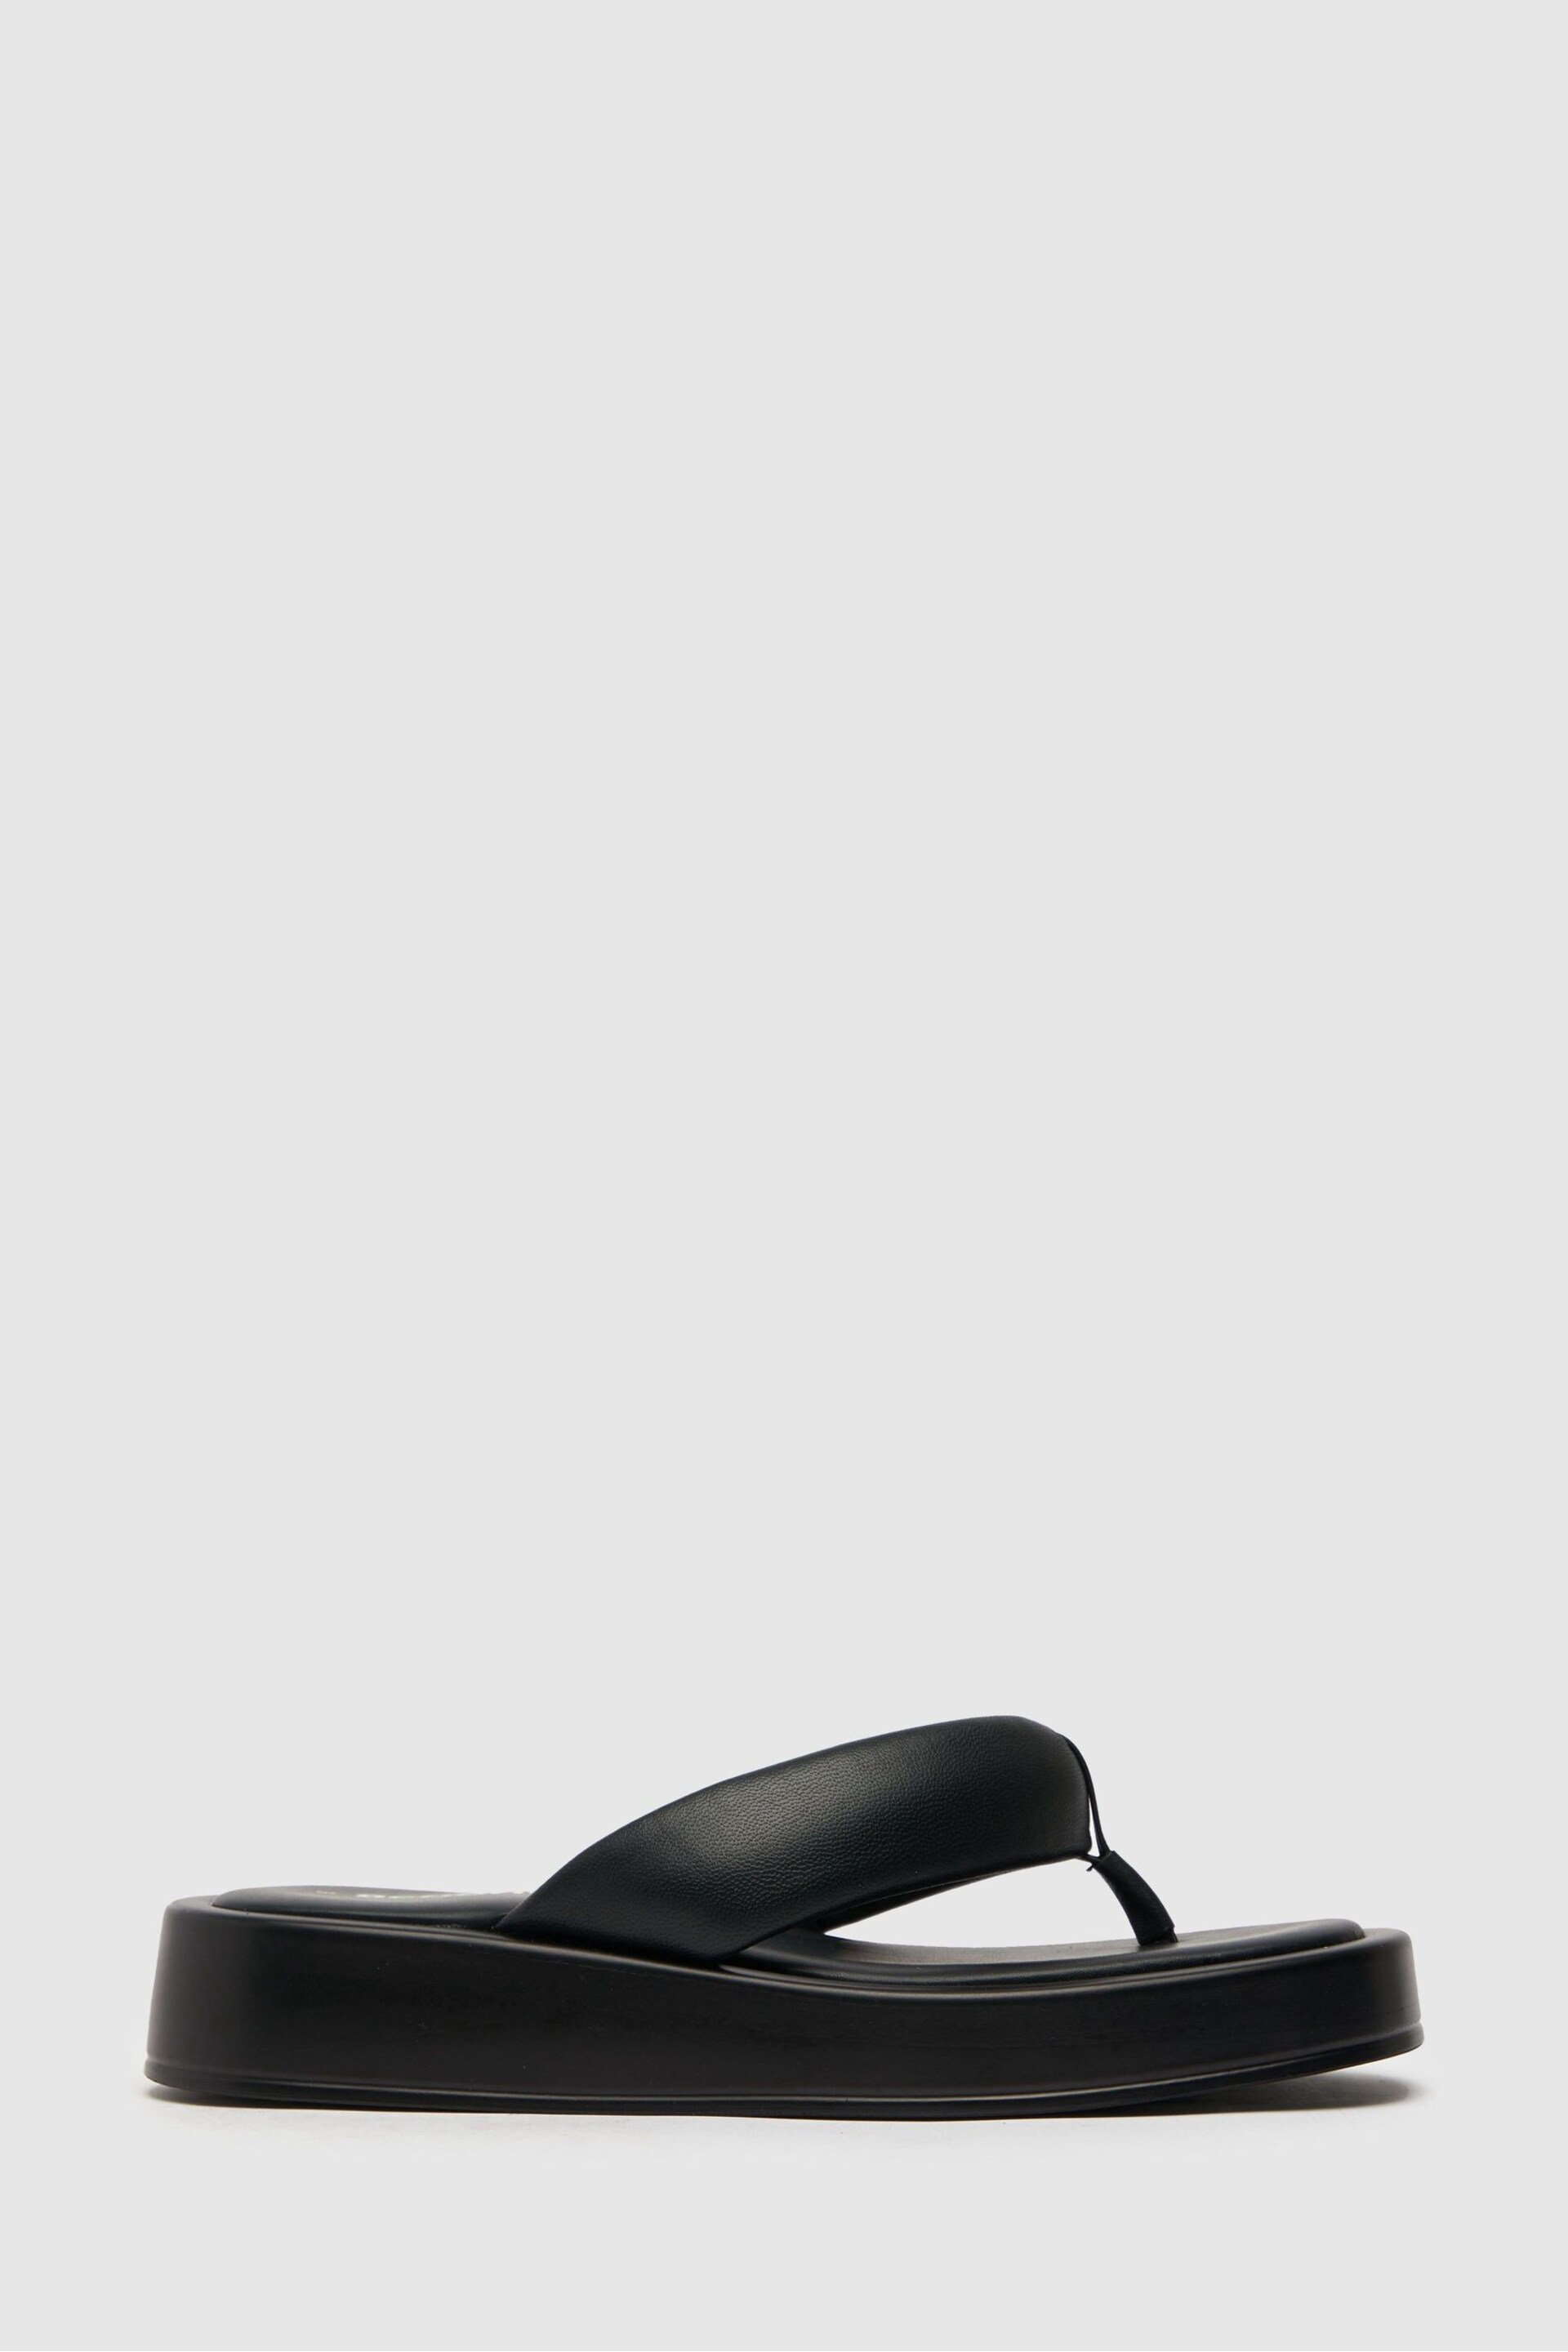 Schuh Tonya Flatform Black Toe Thong - Image 1 of 4